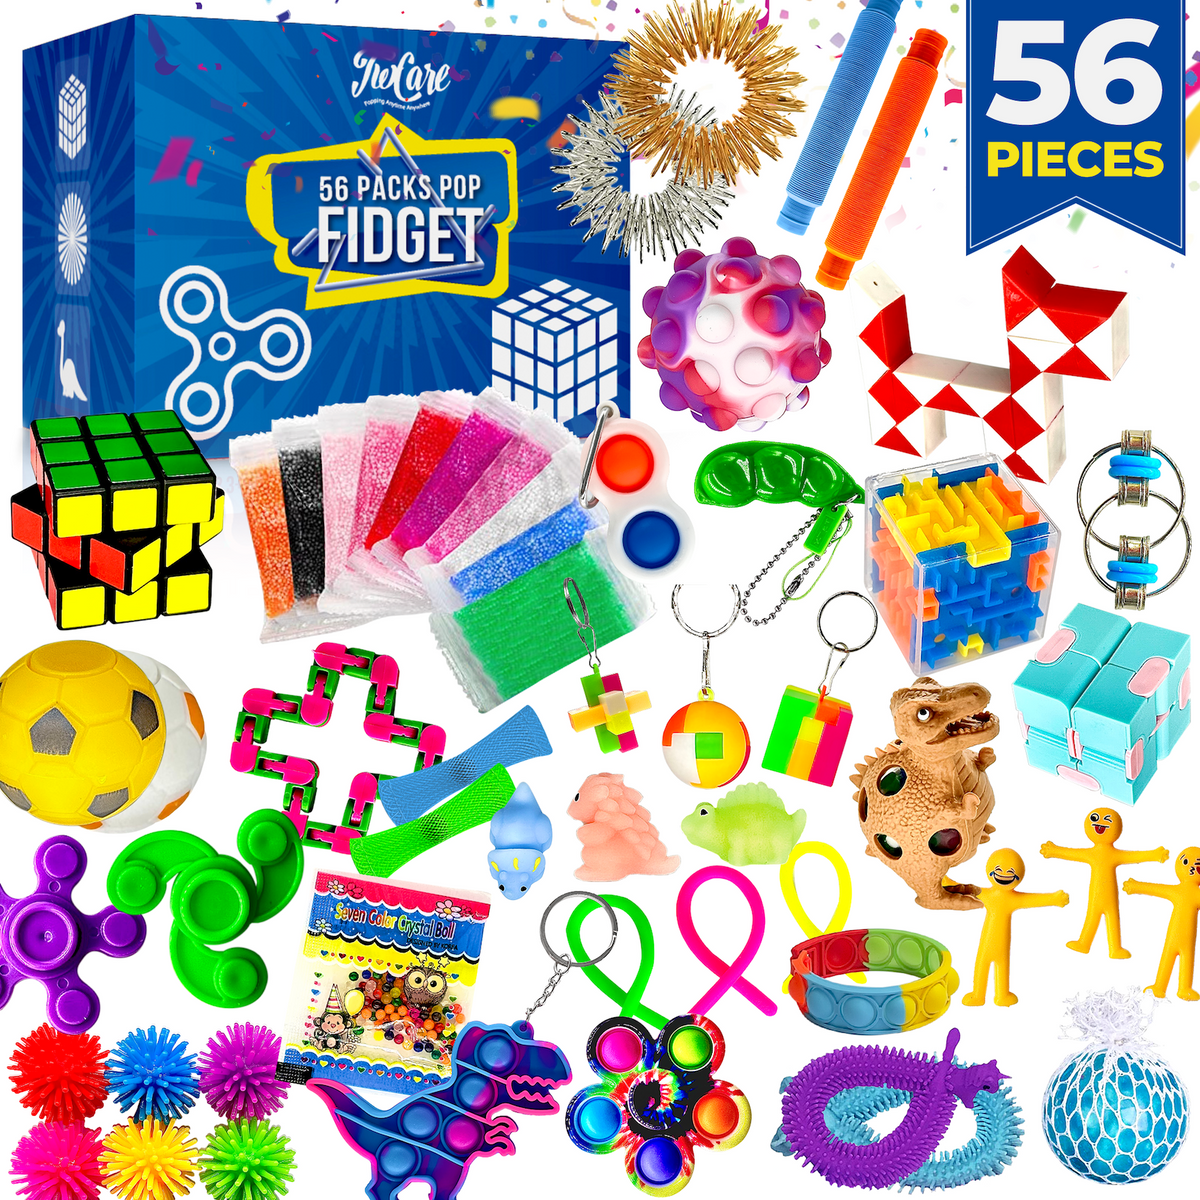  (4 Pack) Pop It Fidget Toys, Pop Its Fidgets Stocking